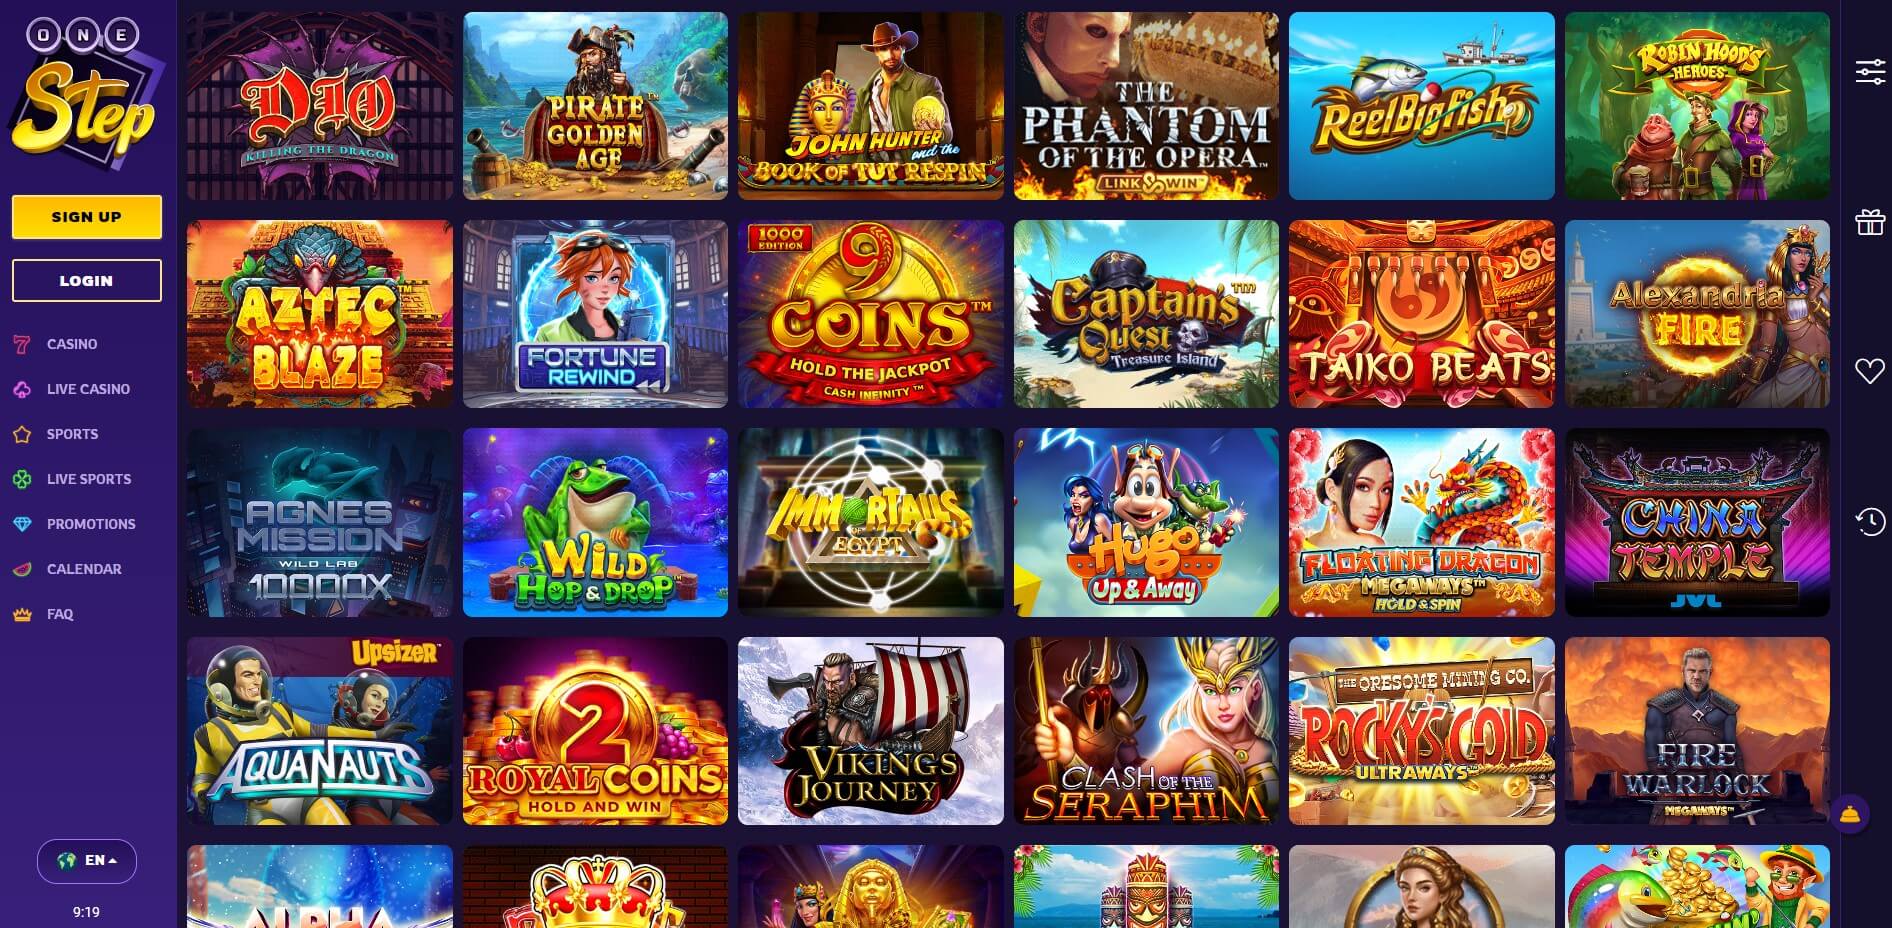 OneStep Casino Games